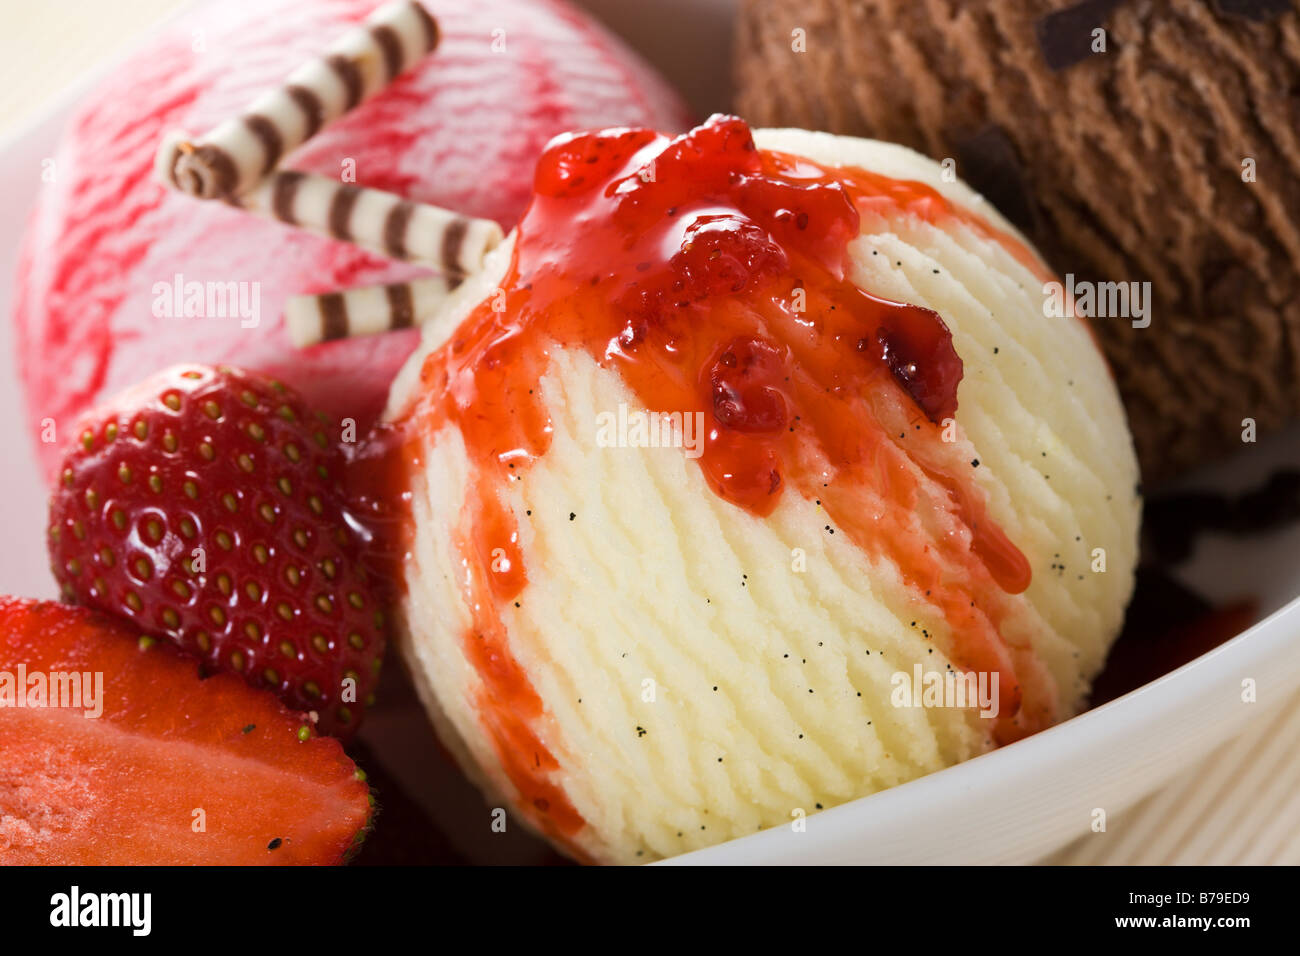 close-up of three balls of icecream - vanilla, strawberry, chocolate - with strawberry topping, strawberries and chocolate rolls Stock Photo